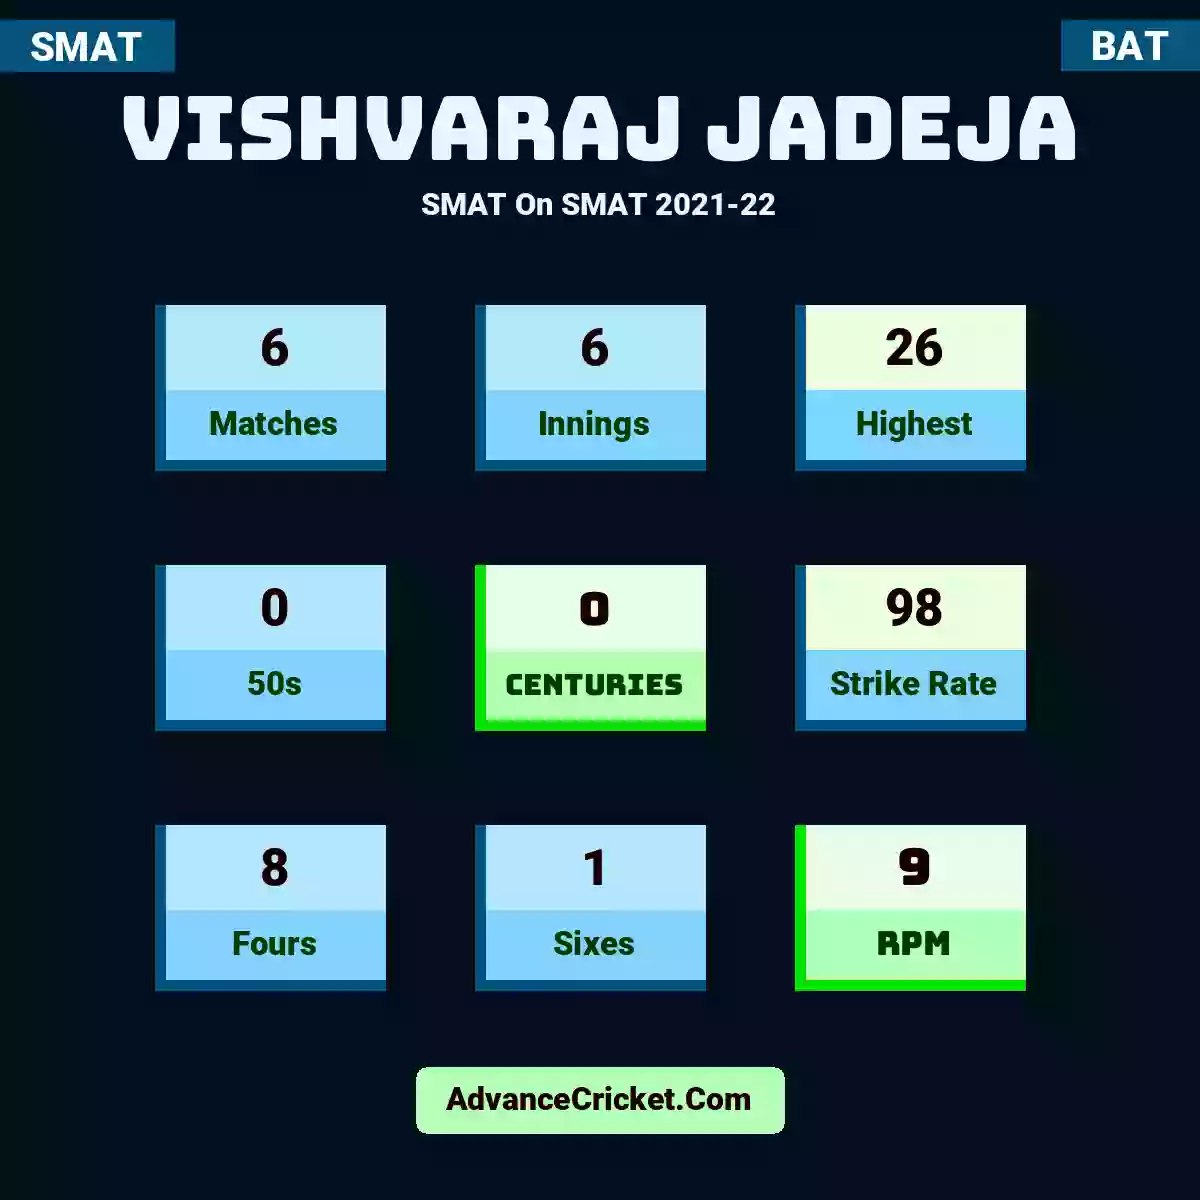 Vishvaraj Jadeja SMAT  On SMAT 2021-22, Vishvaraj Jadeja played 6 matches, scored 26 runs as highest, 0 half-centuries, and 0 centuries, with a strike rate of 98. V.Jadeja hit 8 fours and 1 sixes, with an RPM of 9.